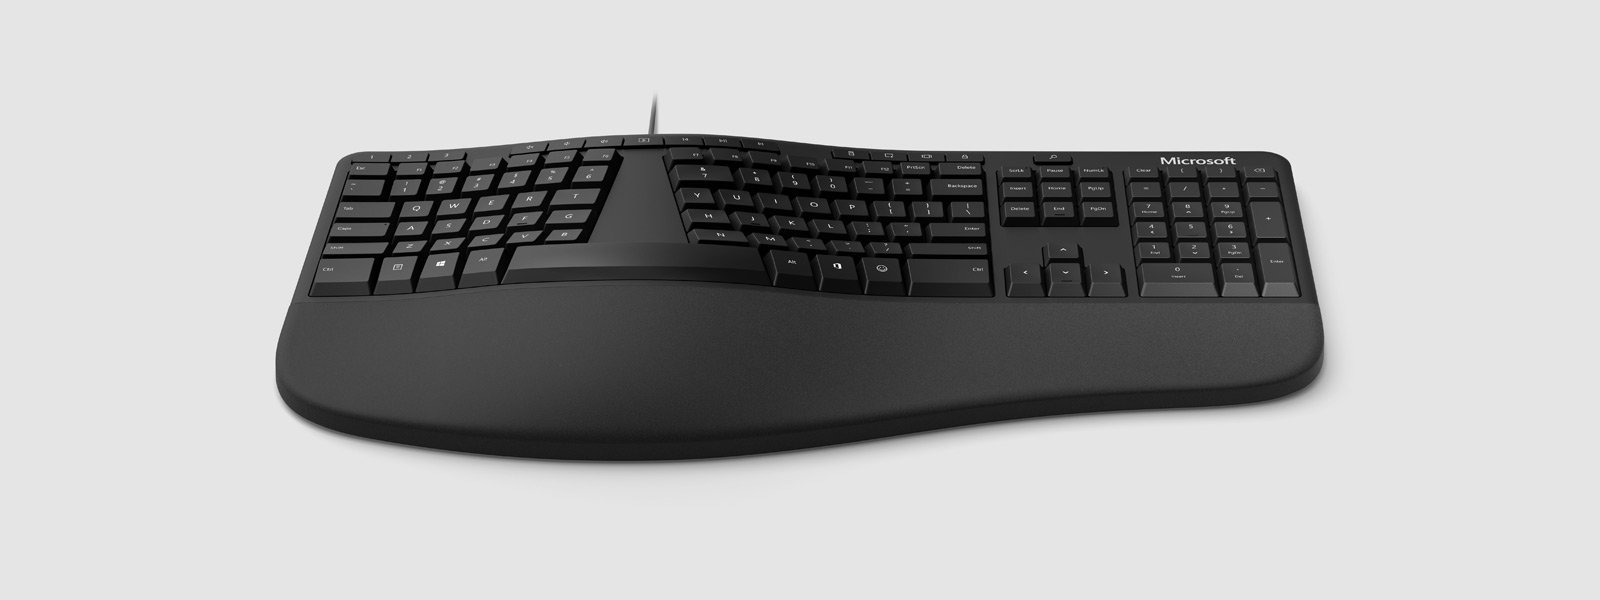 microsoft natural ergonomic keyboard 4000 for business